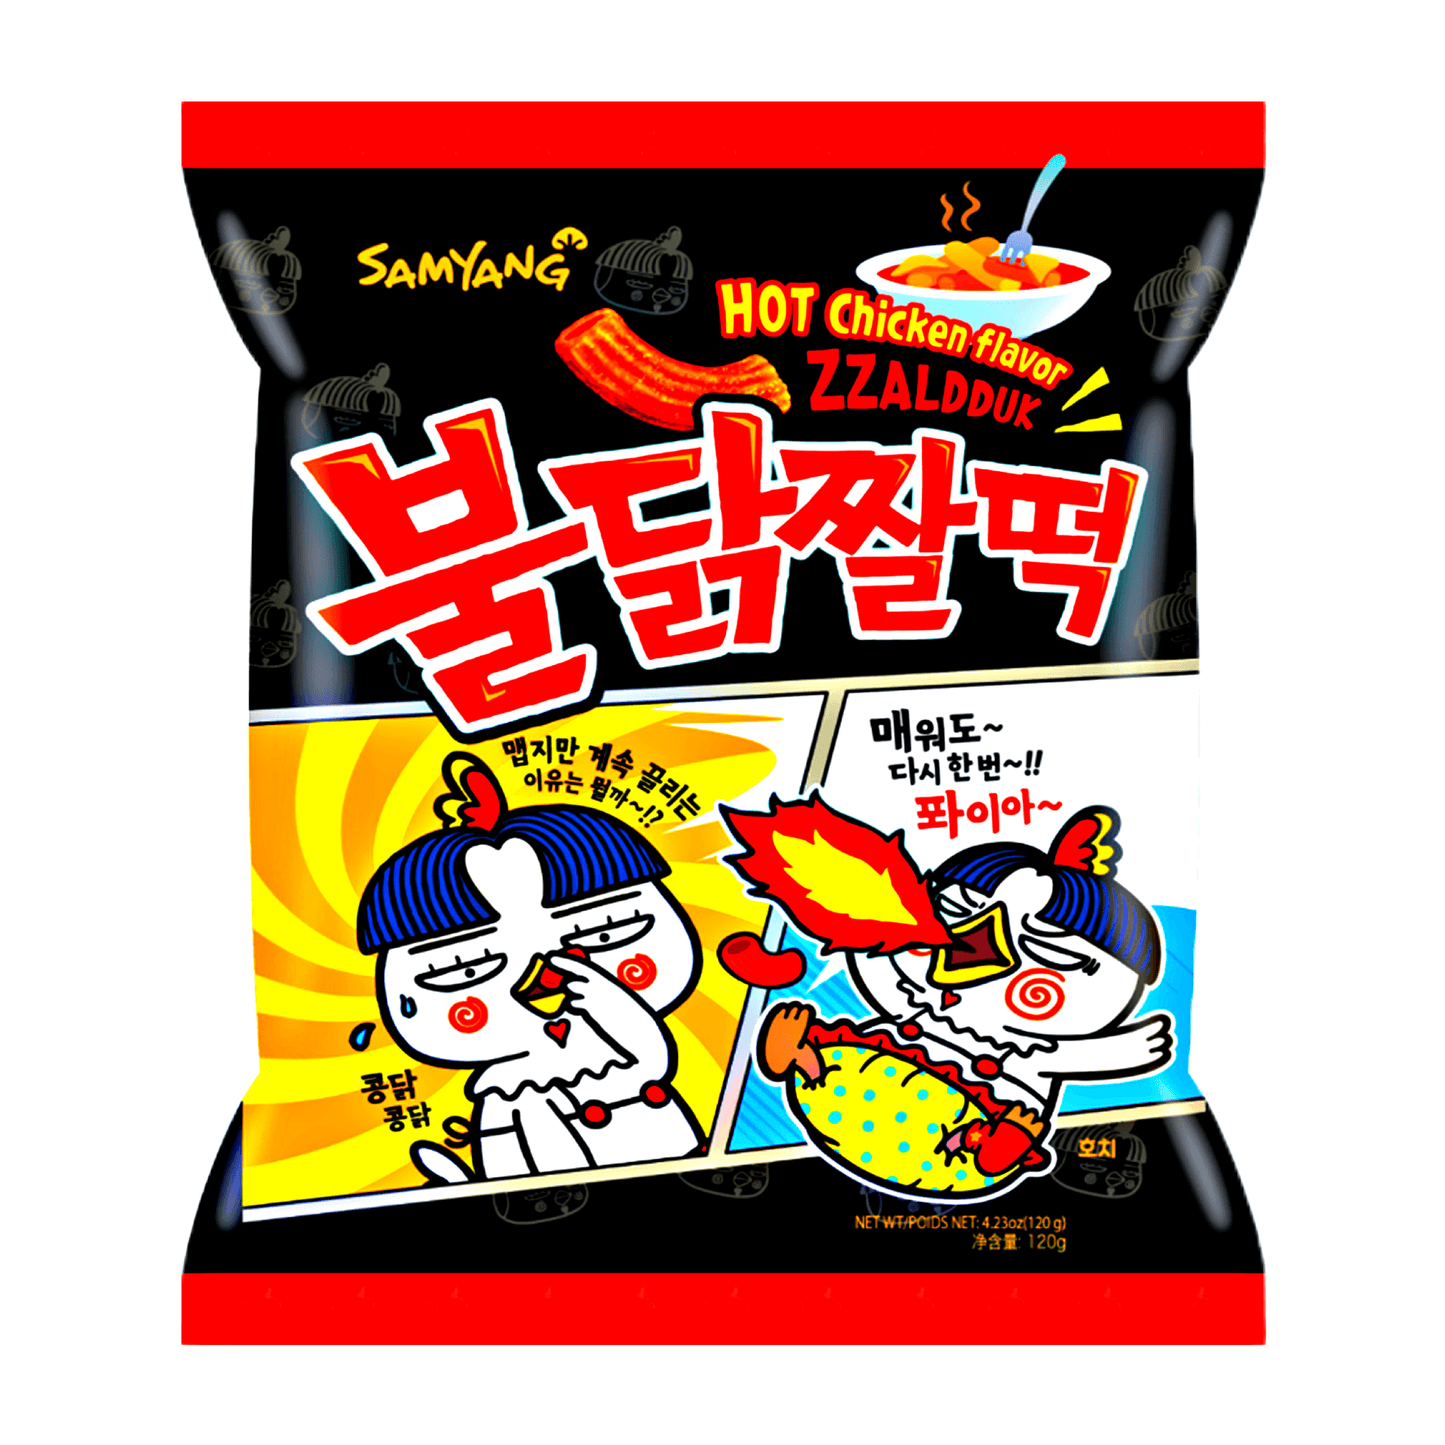 SamYang Zzaldduk Hot Chicken Flavor Snack 120g - The Snacks Box - Asian Snacks Store - The Snacks Box - Korean Snack - Japanese Snack